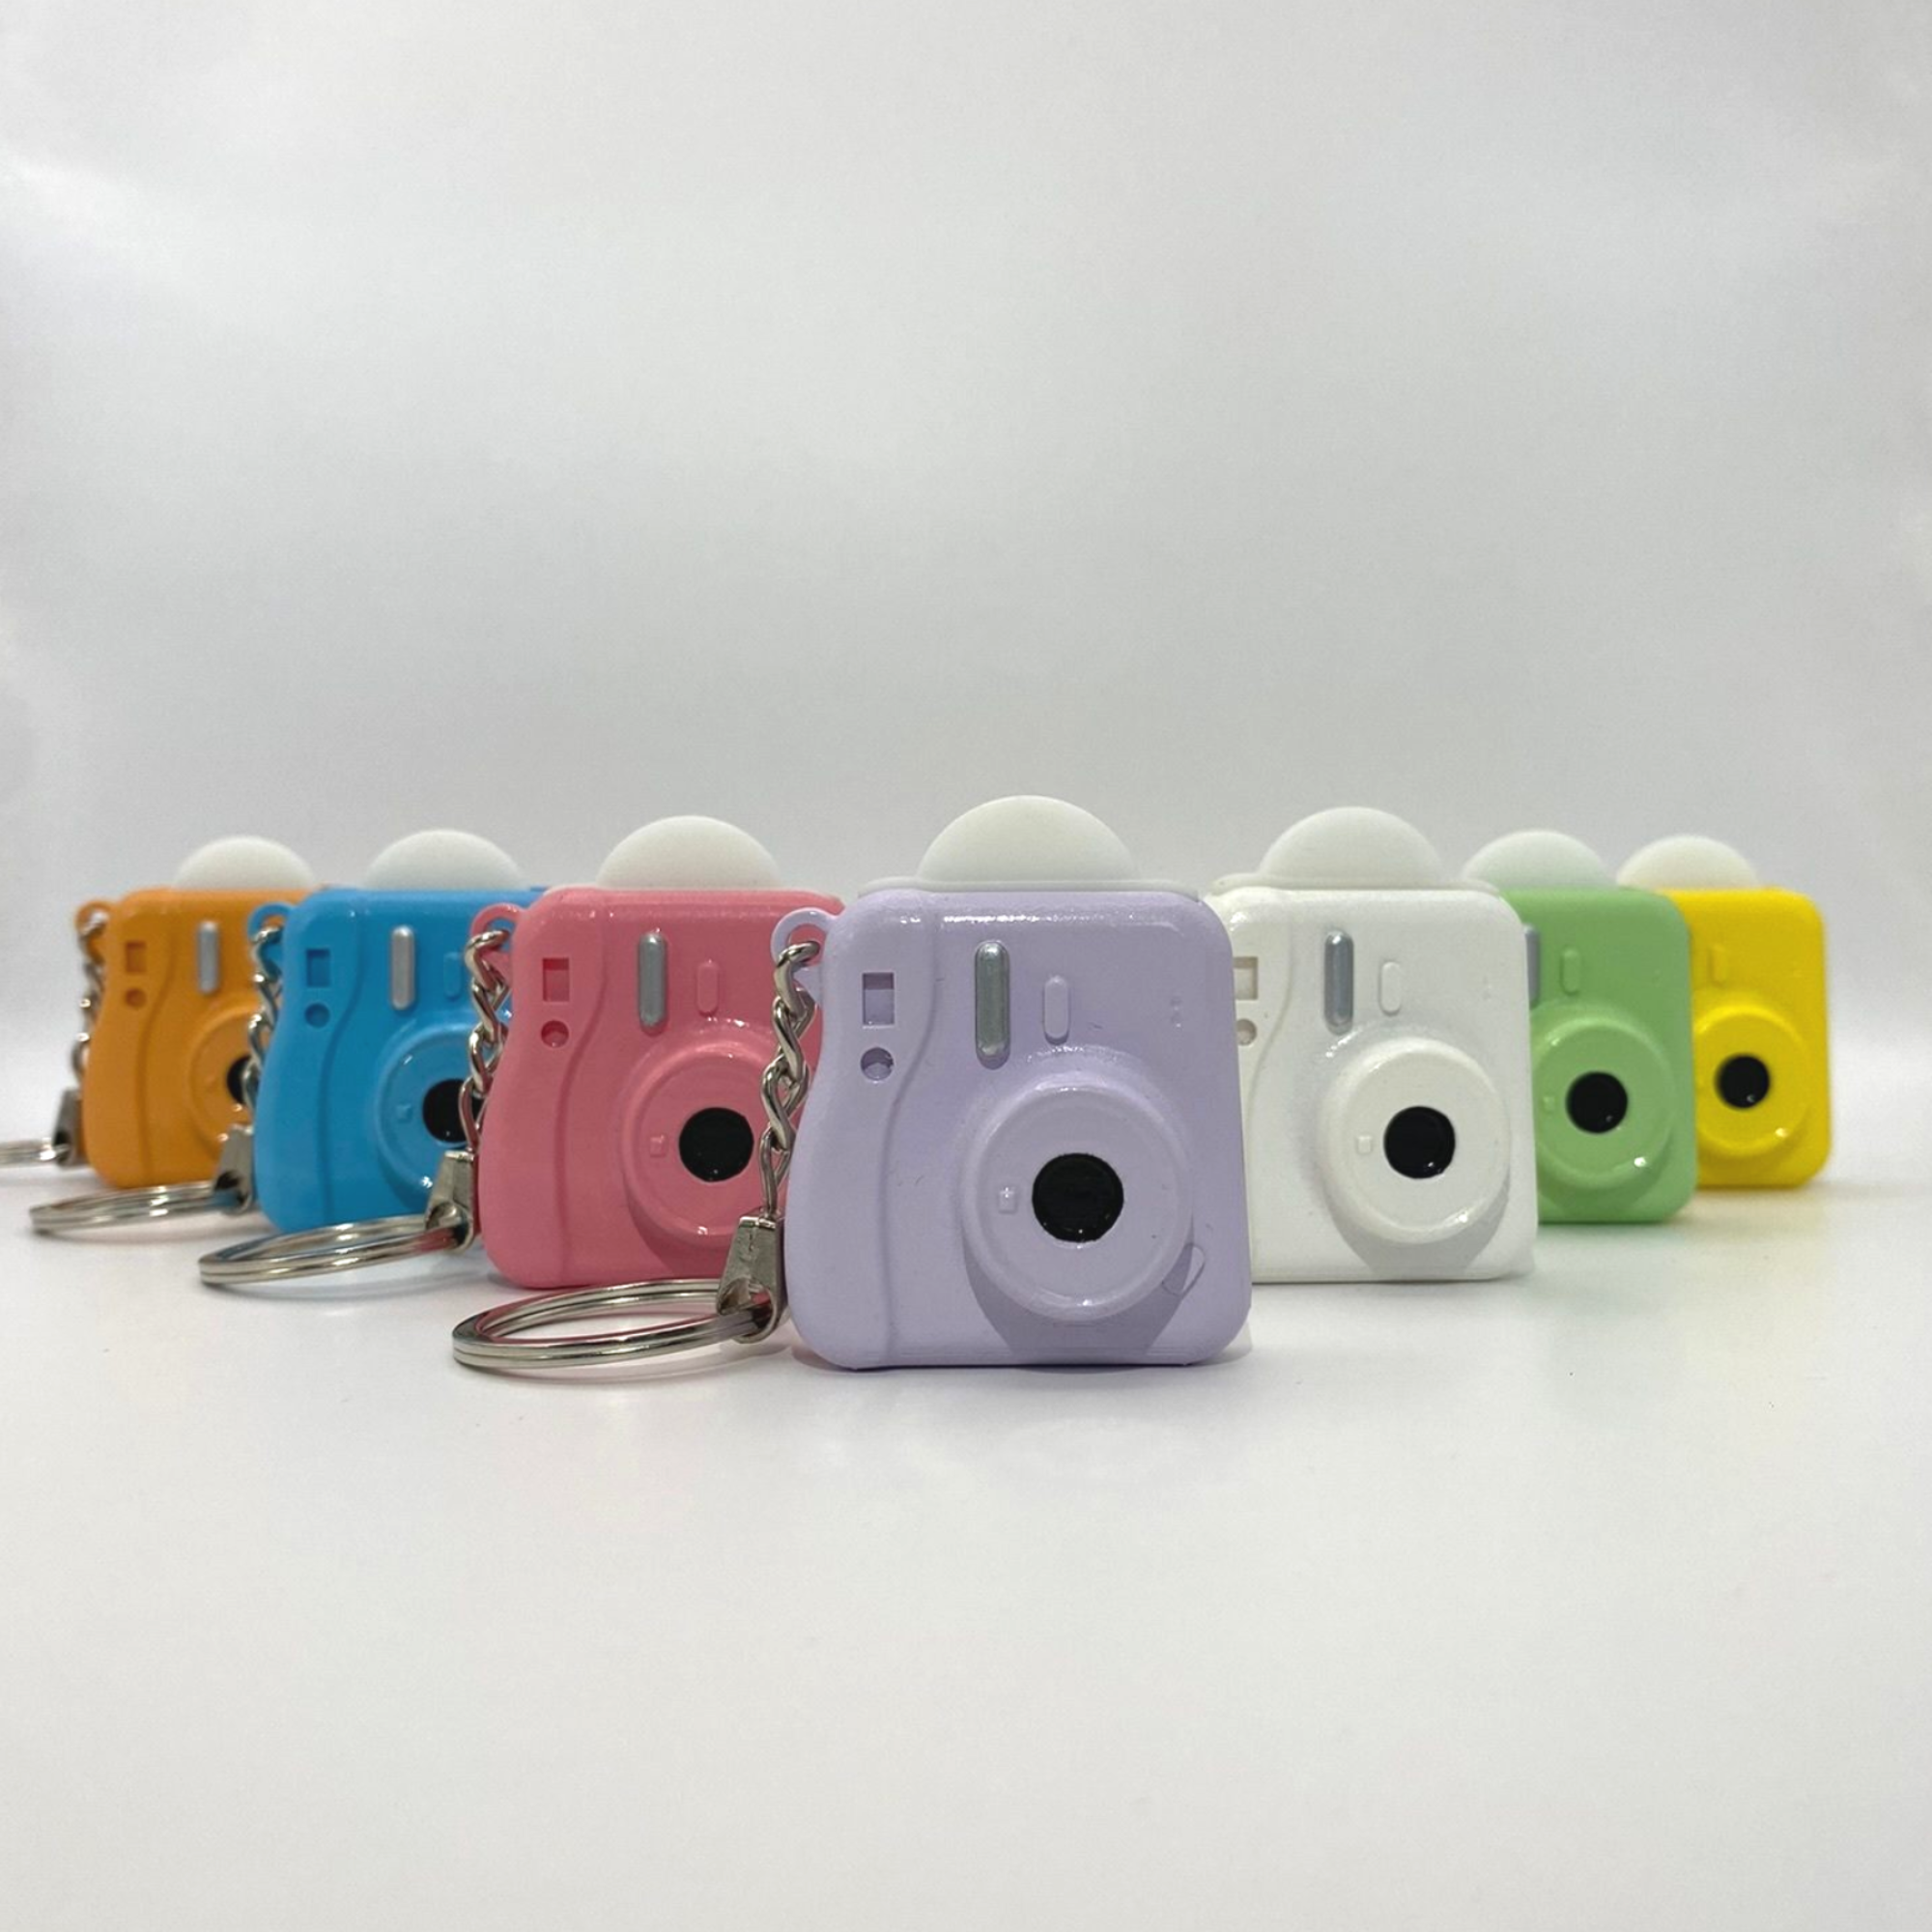 Minicamera sleutelhanger met foto